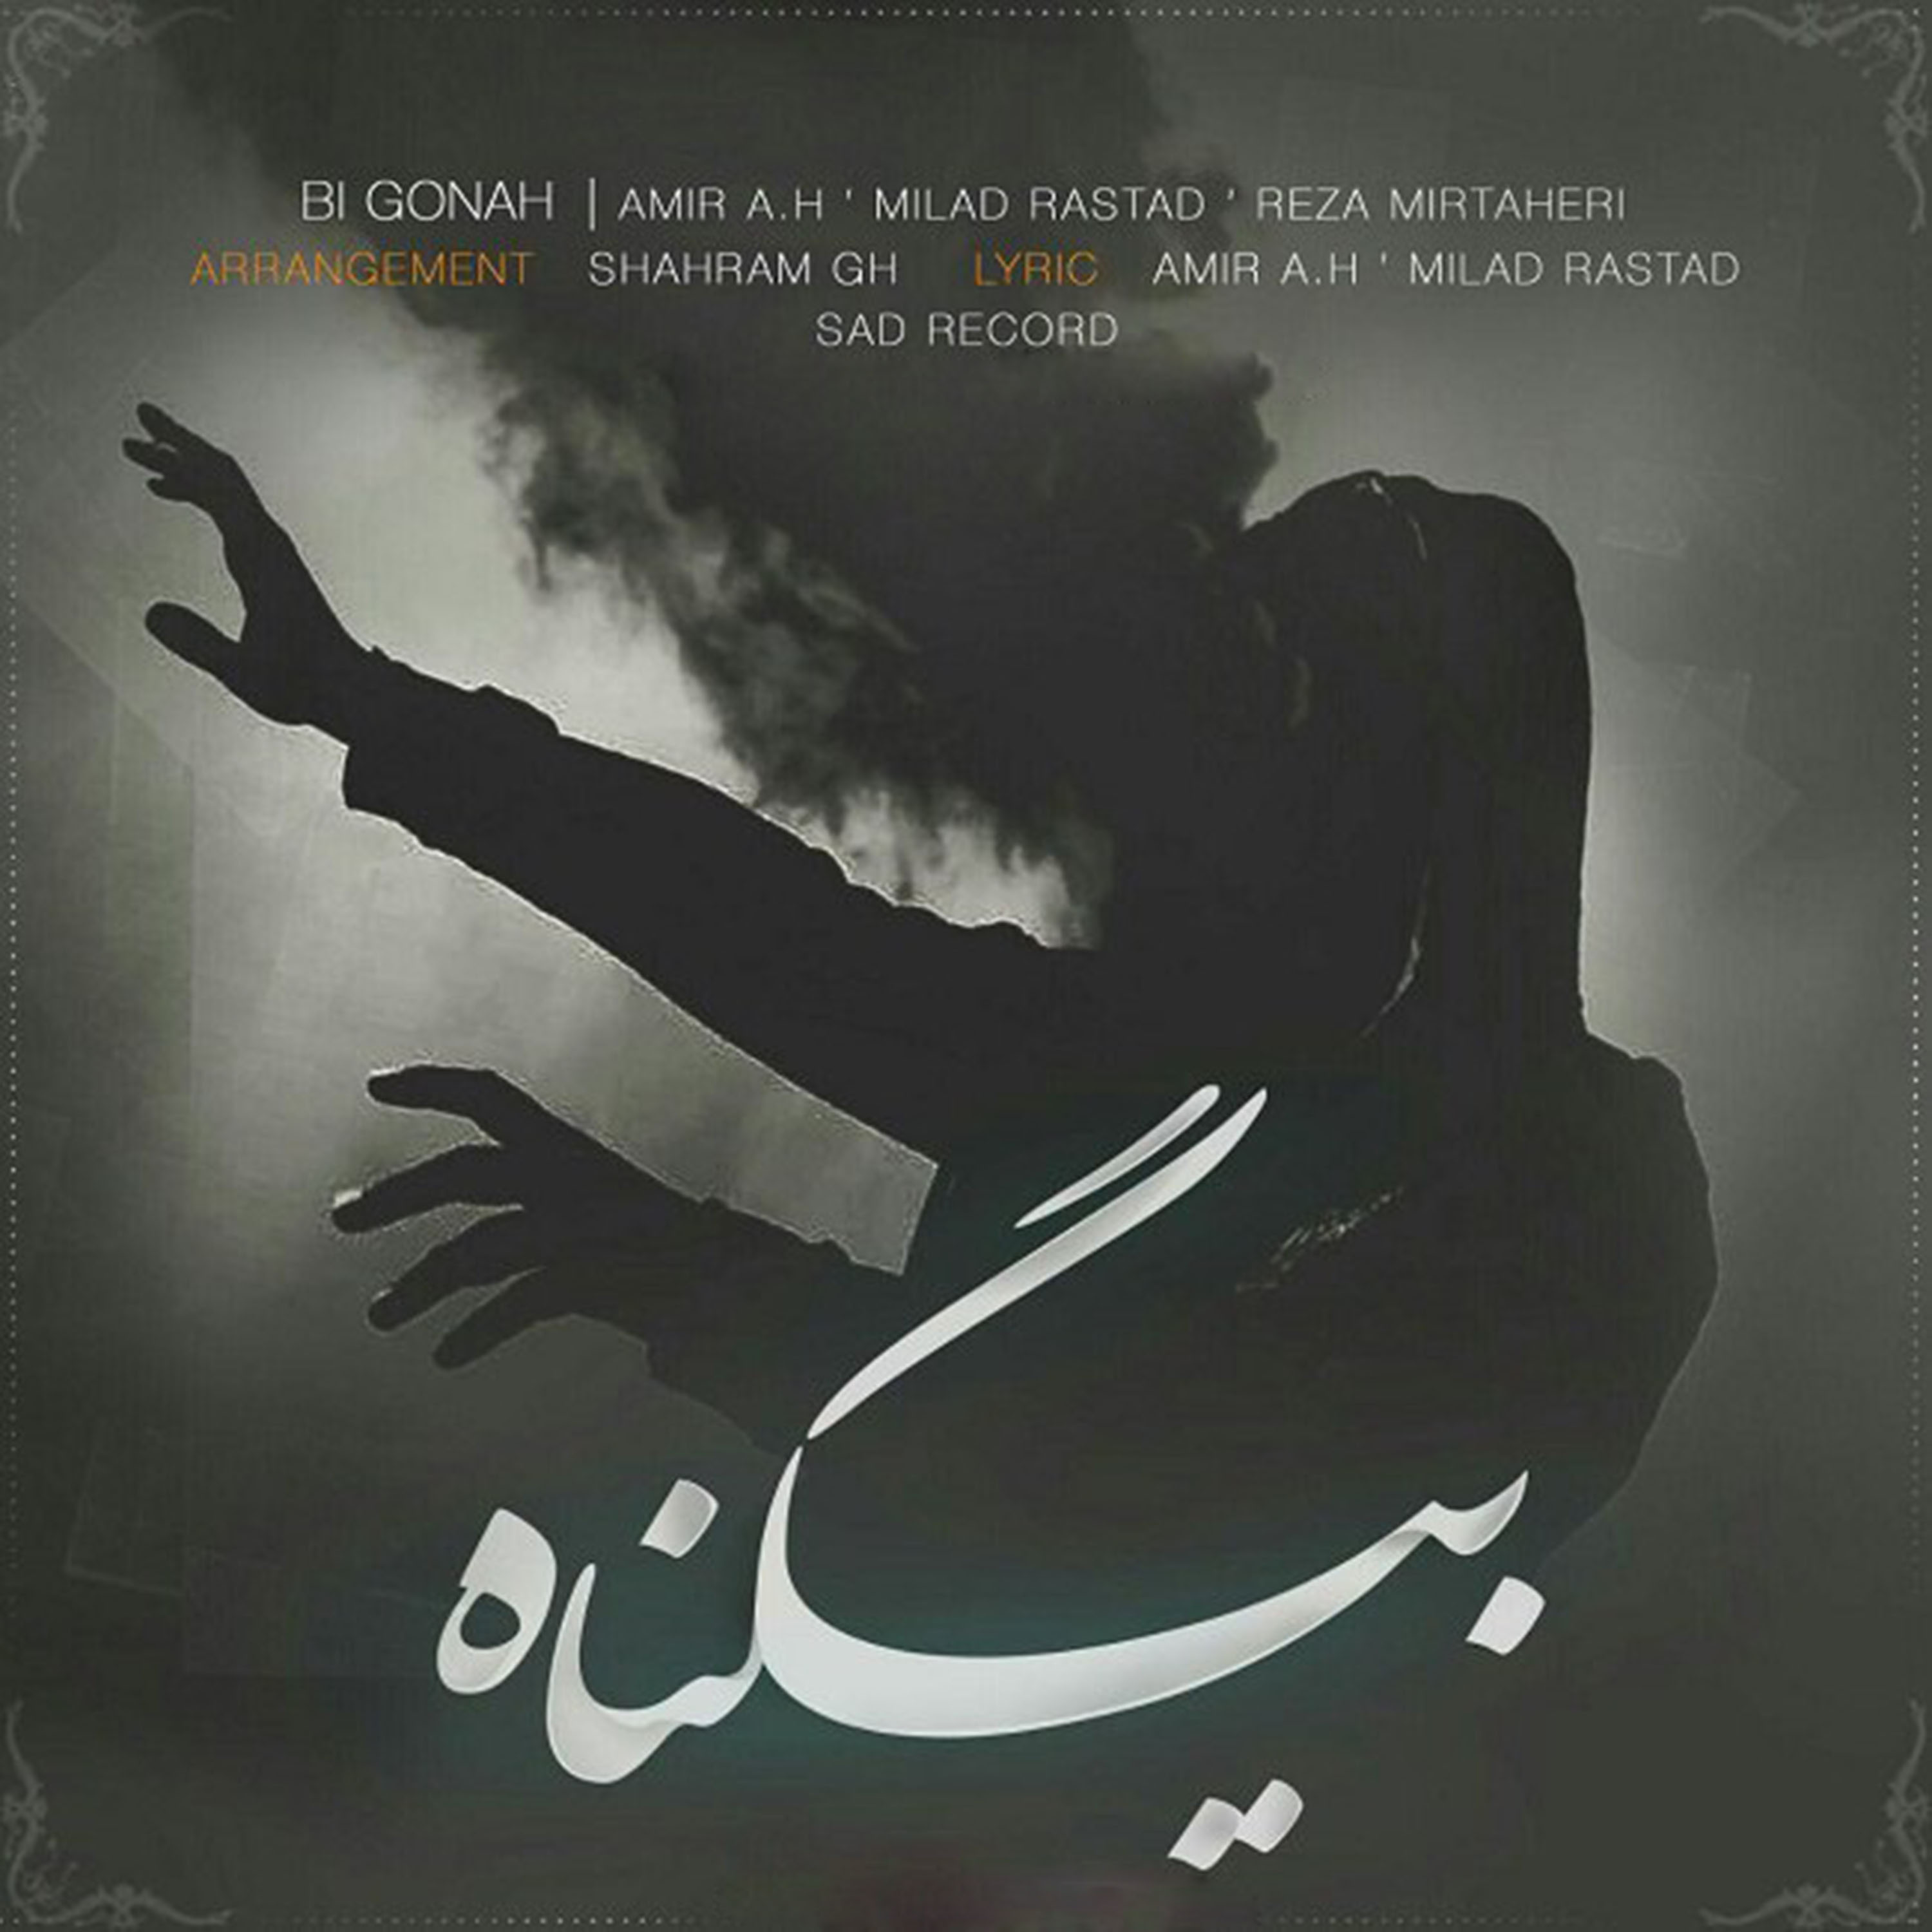  دانلود آهنگ جدید میلاد راستاد - بی گناه | Download New Music By Milad Rastad - Bi Gonah (feat. Amir A.H & Reza Mirtaheri)